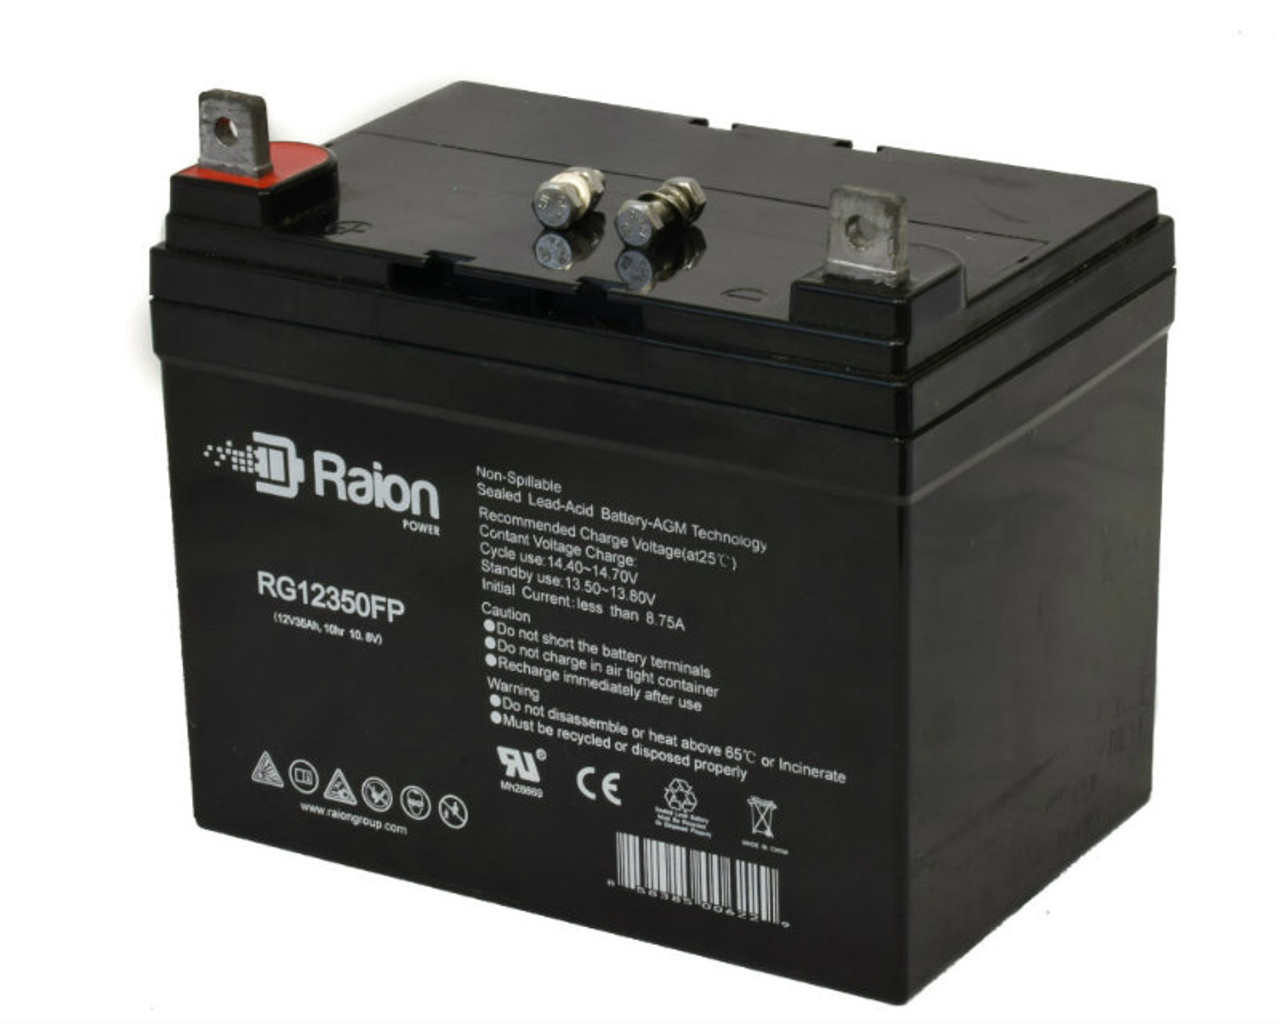 Raion Power Replacement 12V 35Ah RG12350FP Battery for John Deere 260